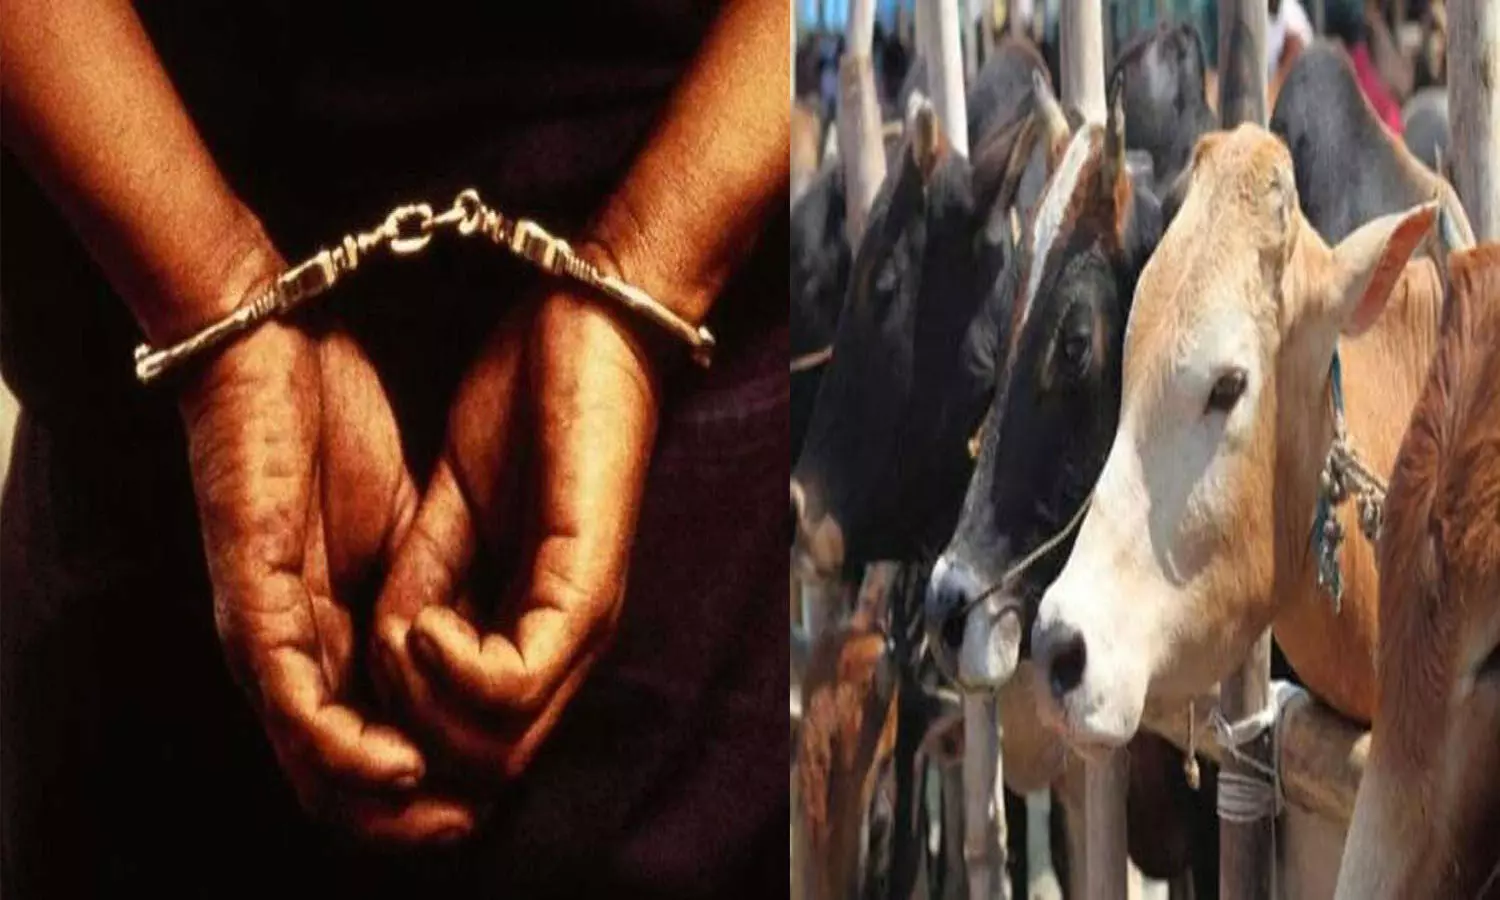 cow smuggler and police